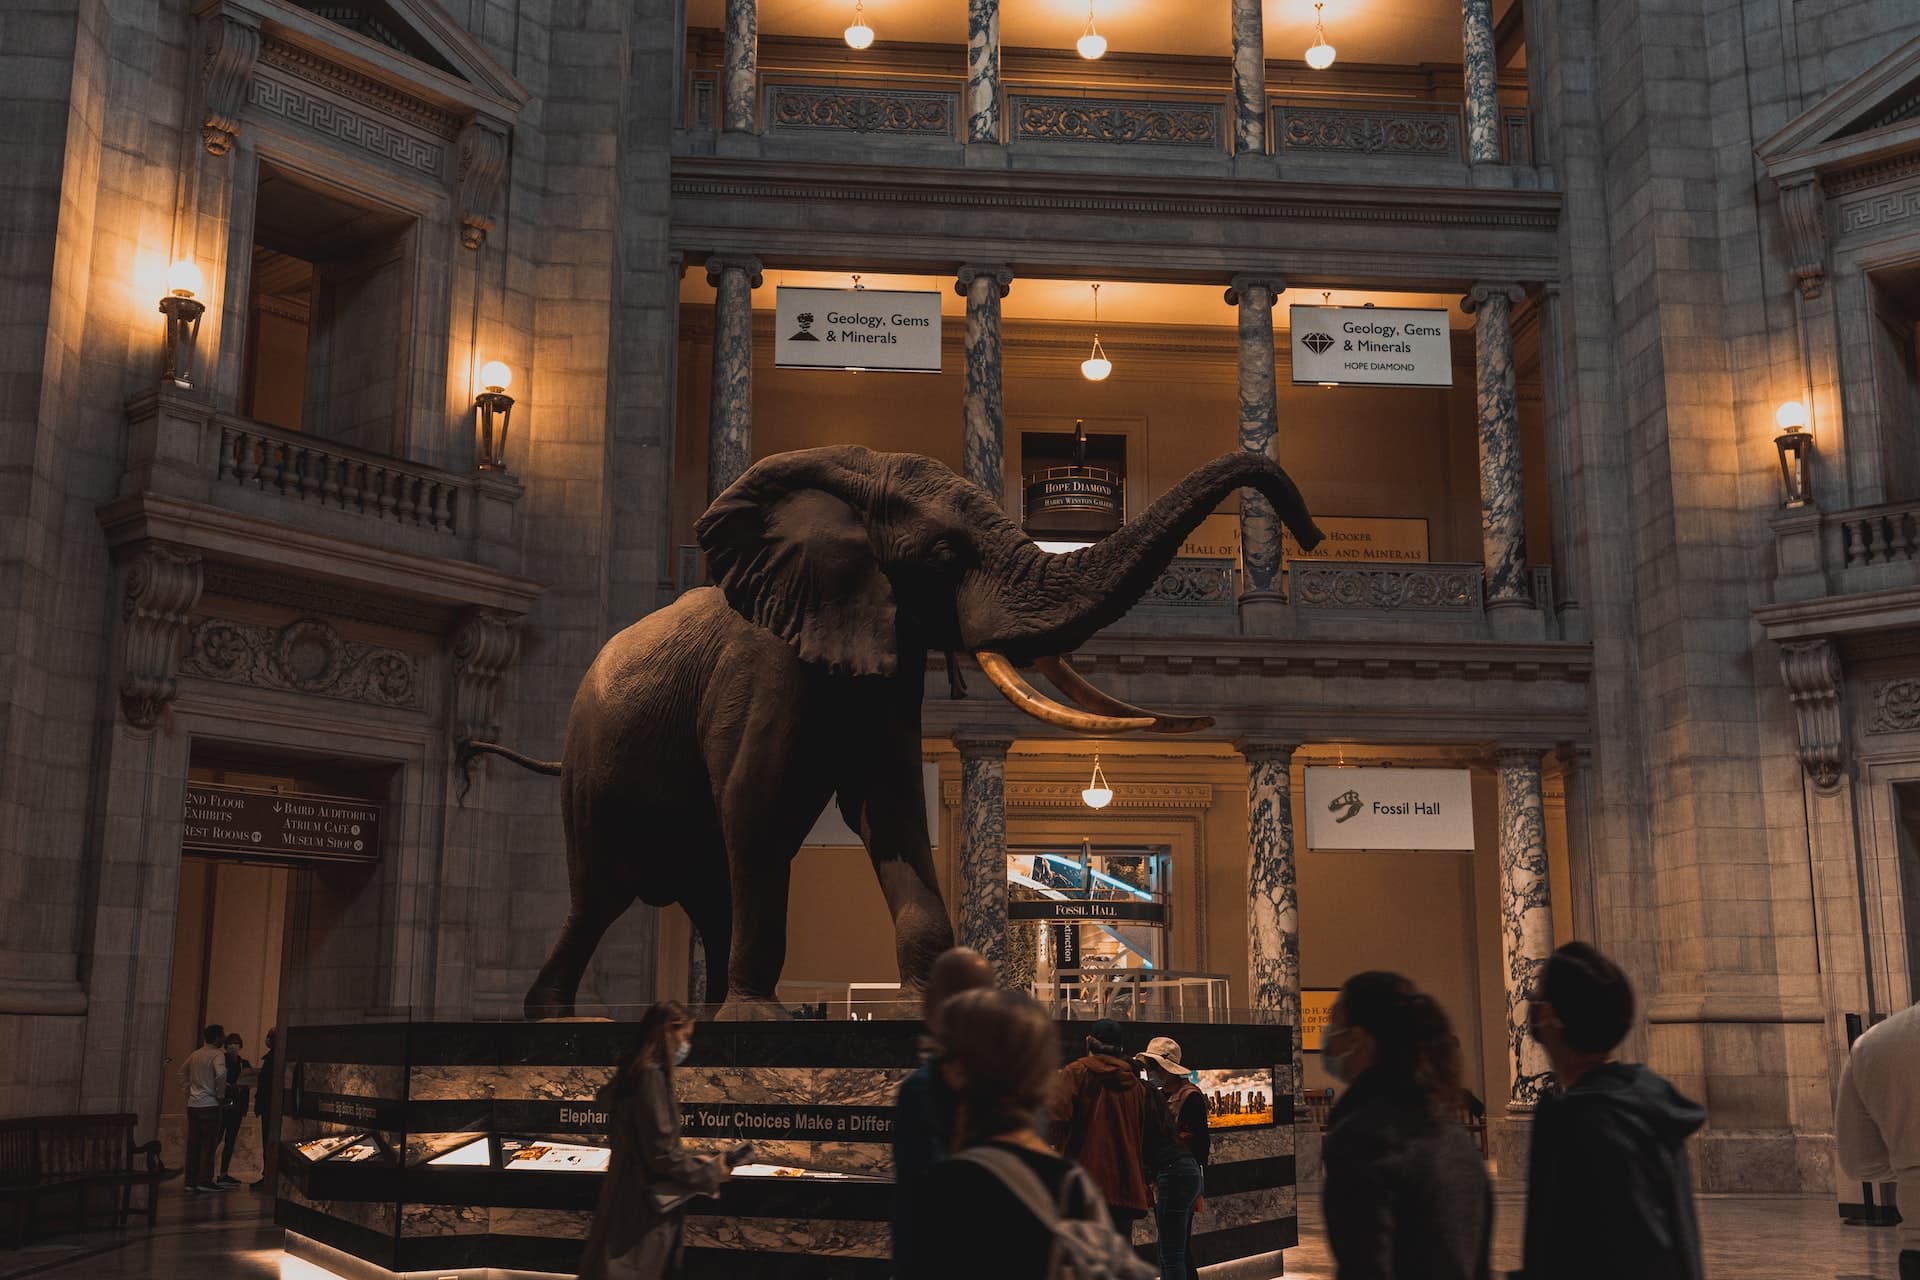 Elephant exhibit inside the Smithsonian Institute